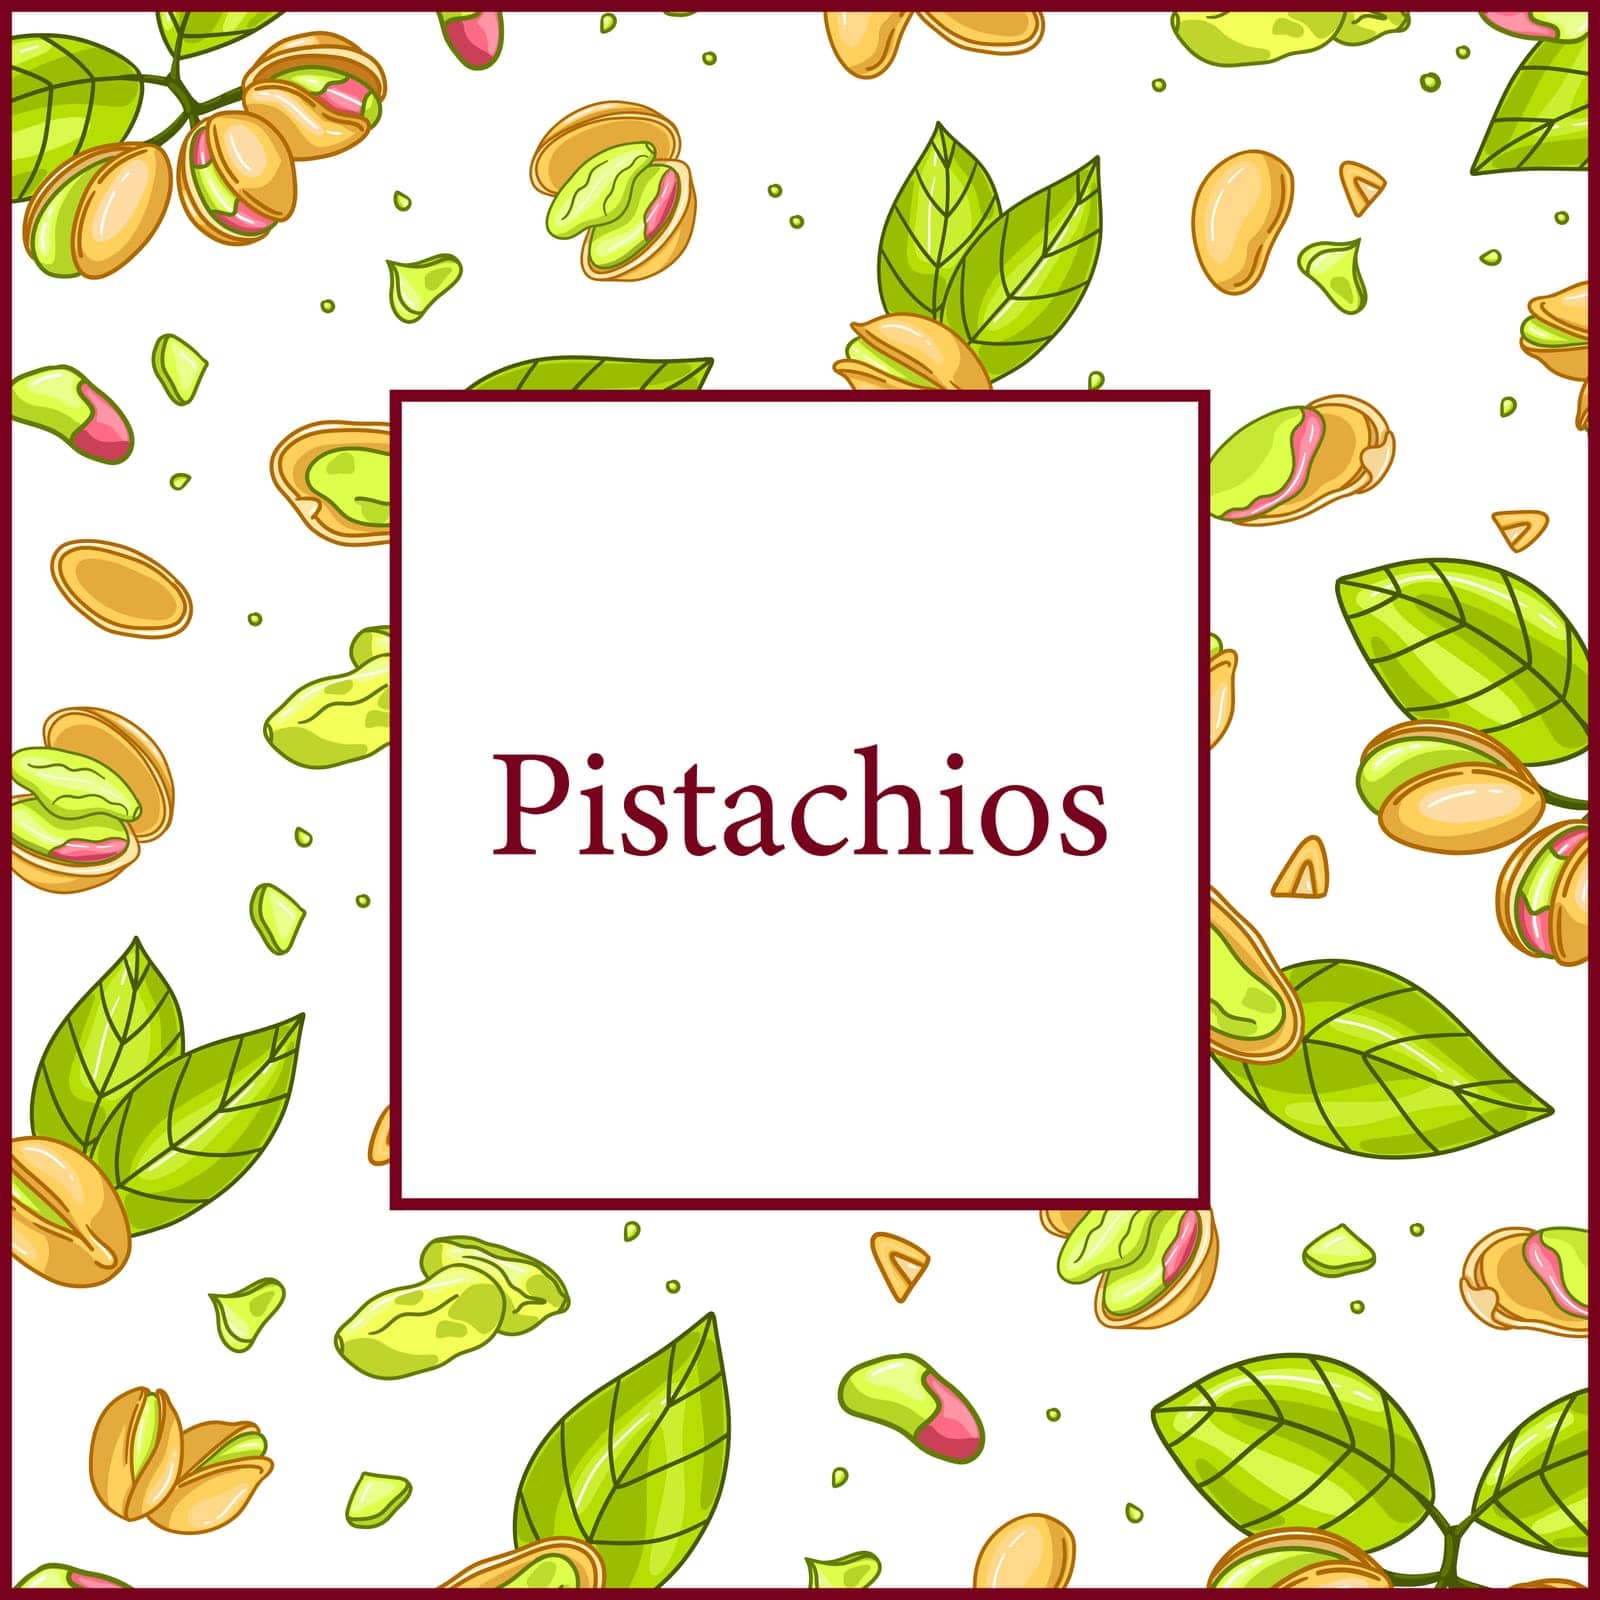 Pistachio frame square menu poster by DaDariy